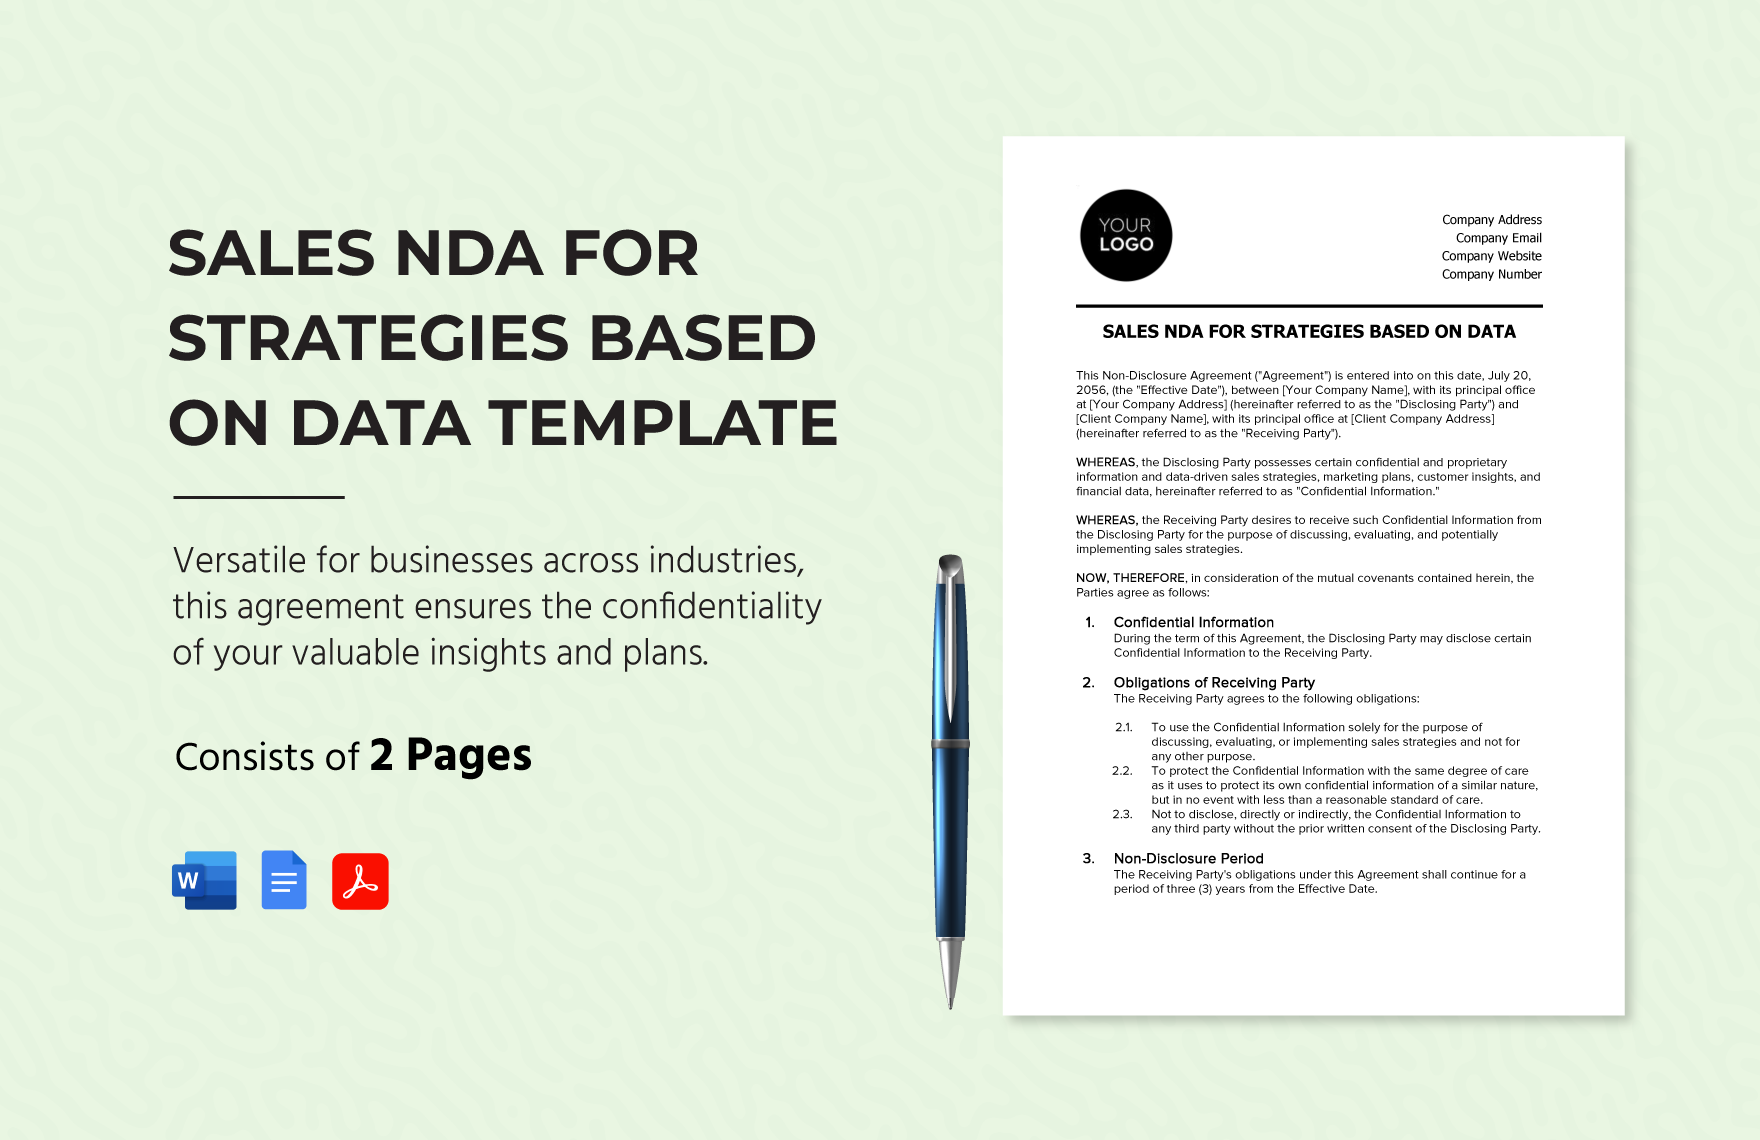 Sales NDA for Strategies Based on Data Template